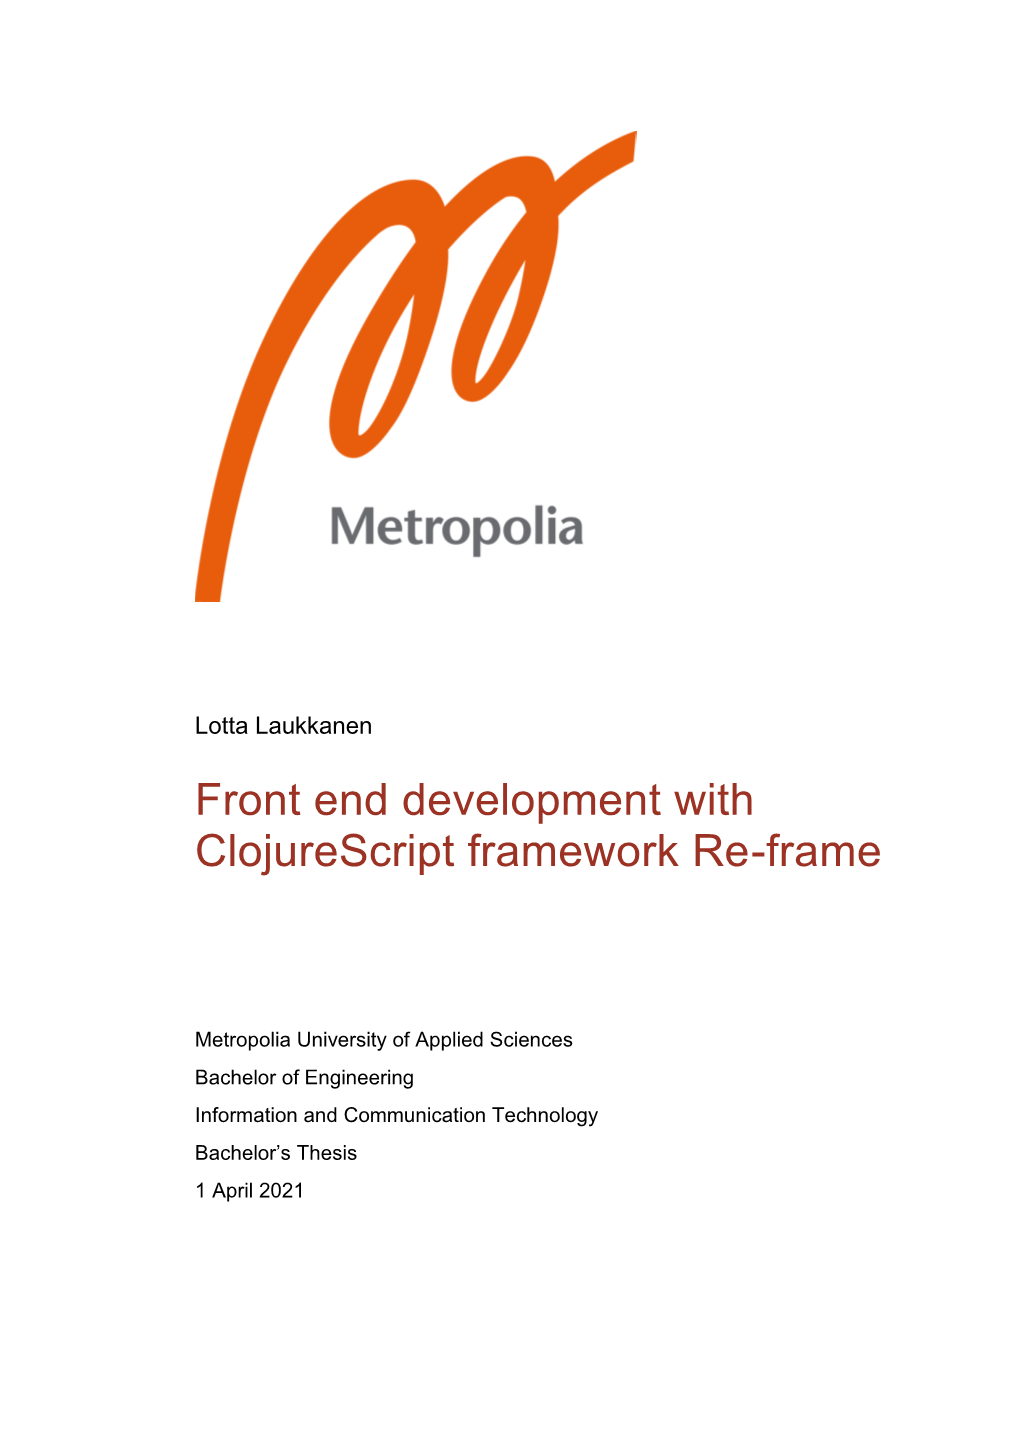 Front End Development with Clojurescript Framework Re-Frame